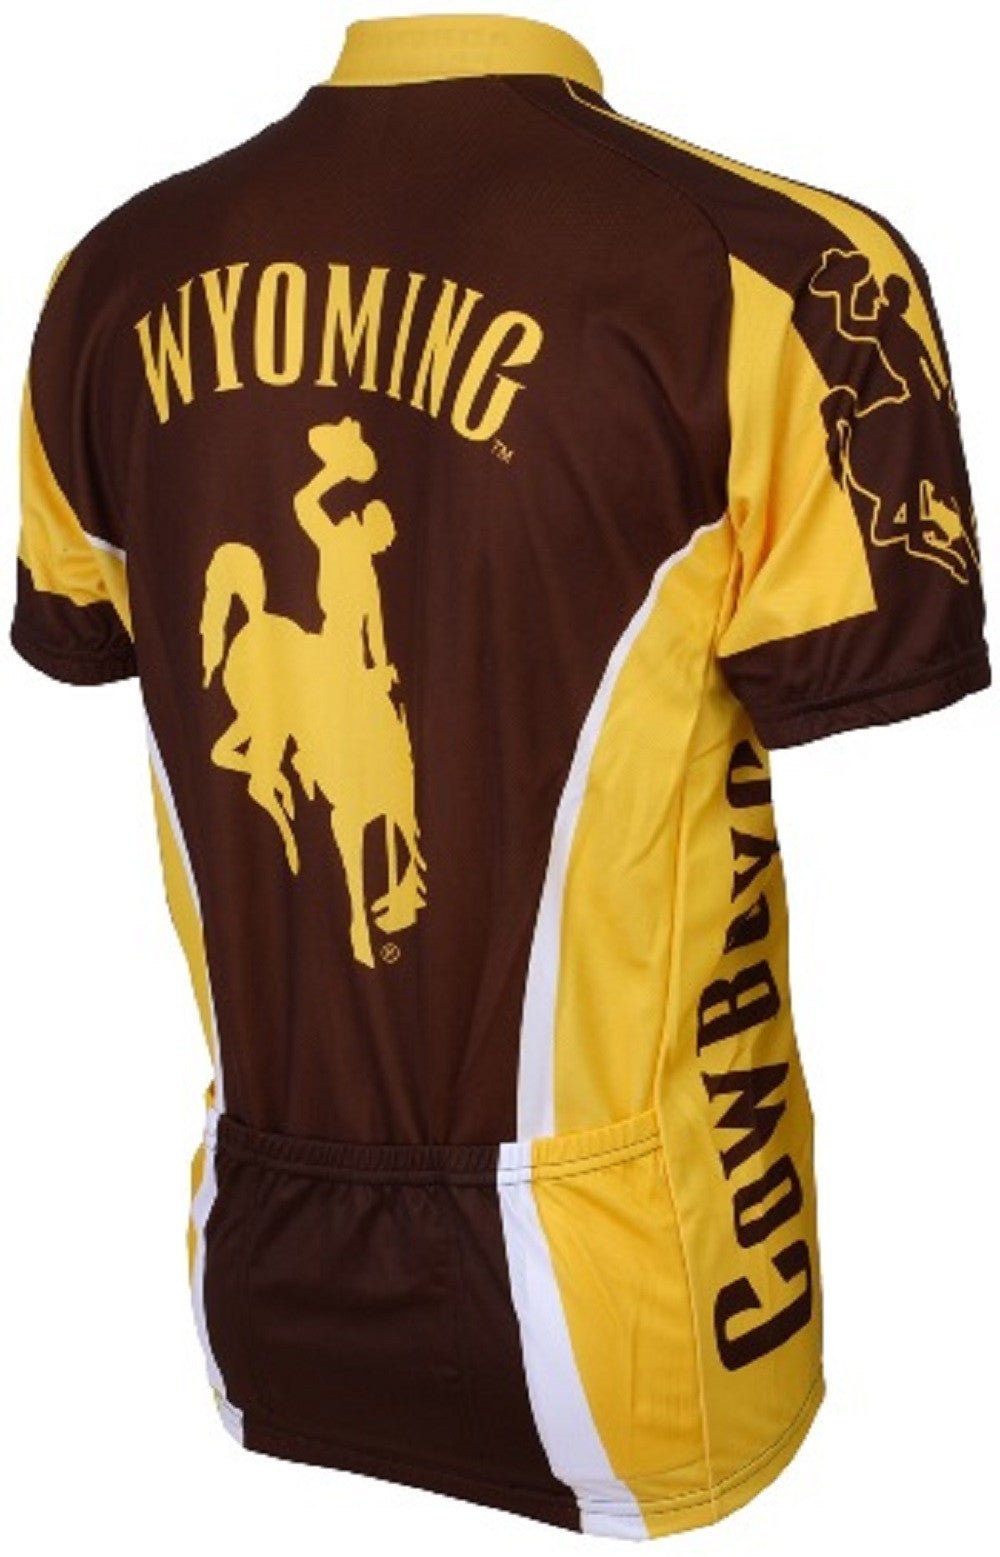 Wyoming Cowboys Men's Cycling Jersey (S, M, L, XL, 2XL, 3XL)